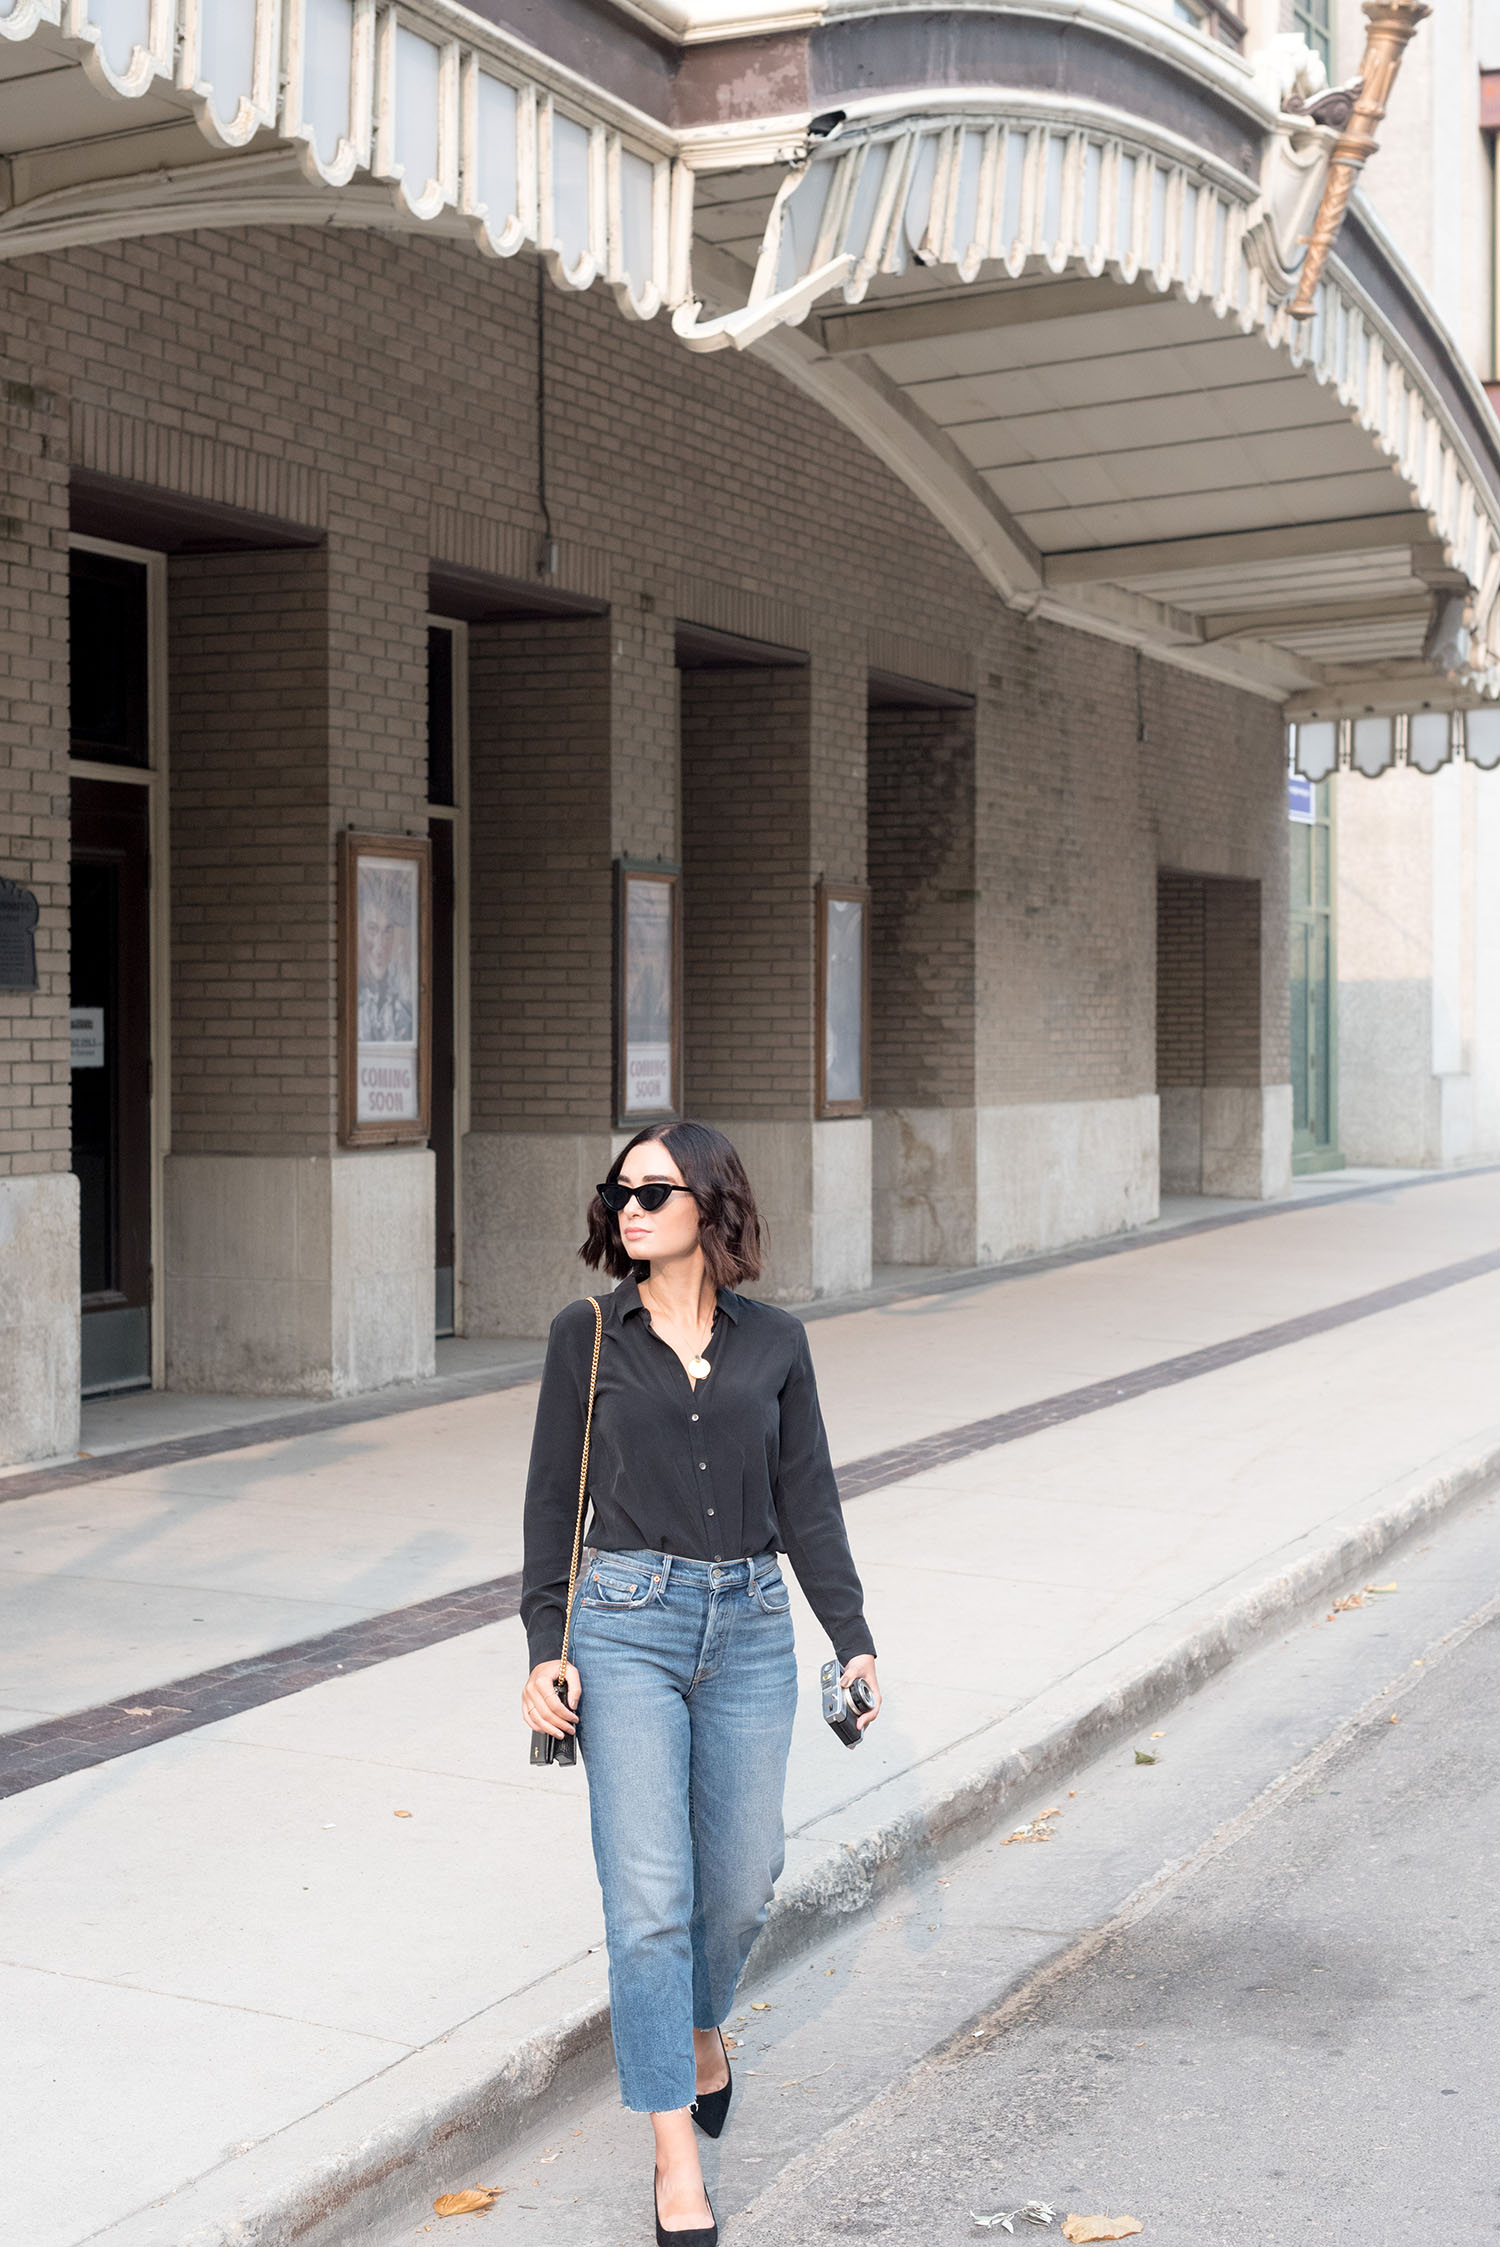 Top Winnipeg fashion blogger Cee Fardoe of Coco & Vera walks outside Pantages Playhouse wearing Grlfrnd Helena jeans and an Everlane silk blouse